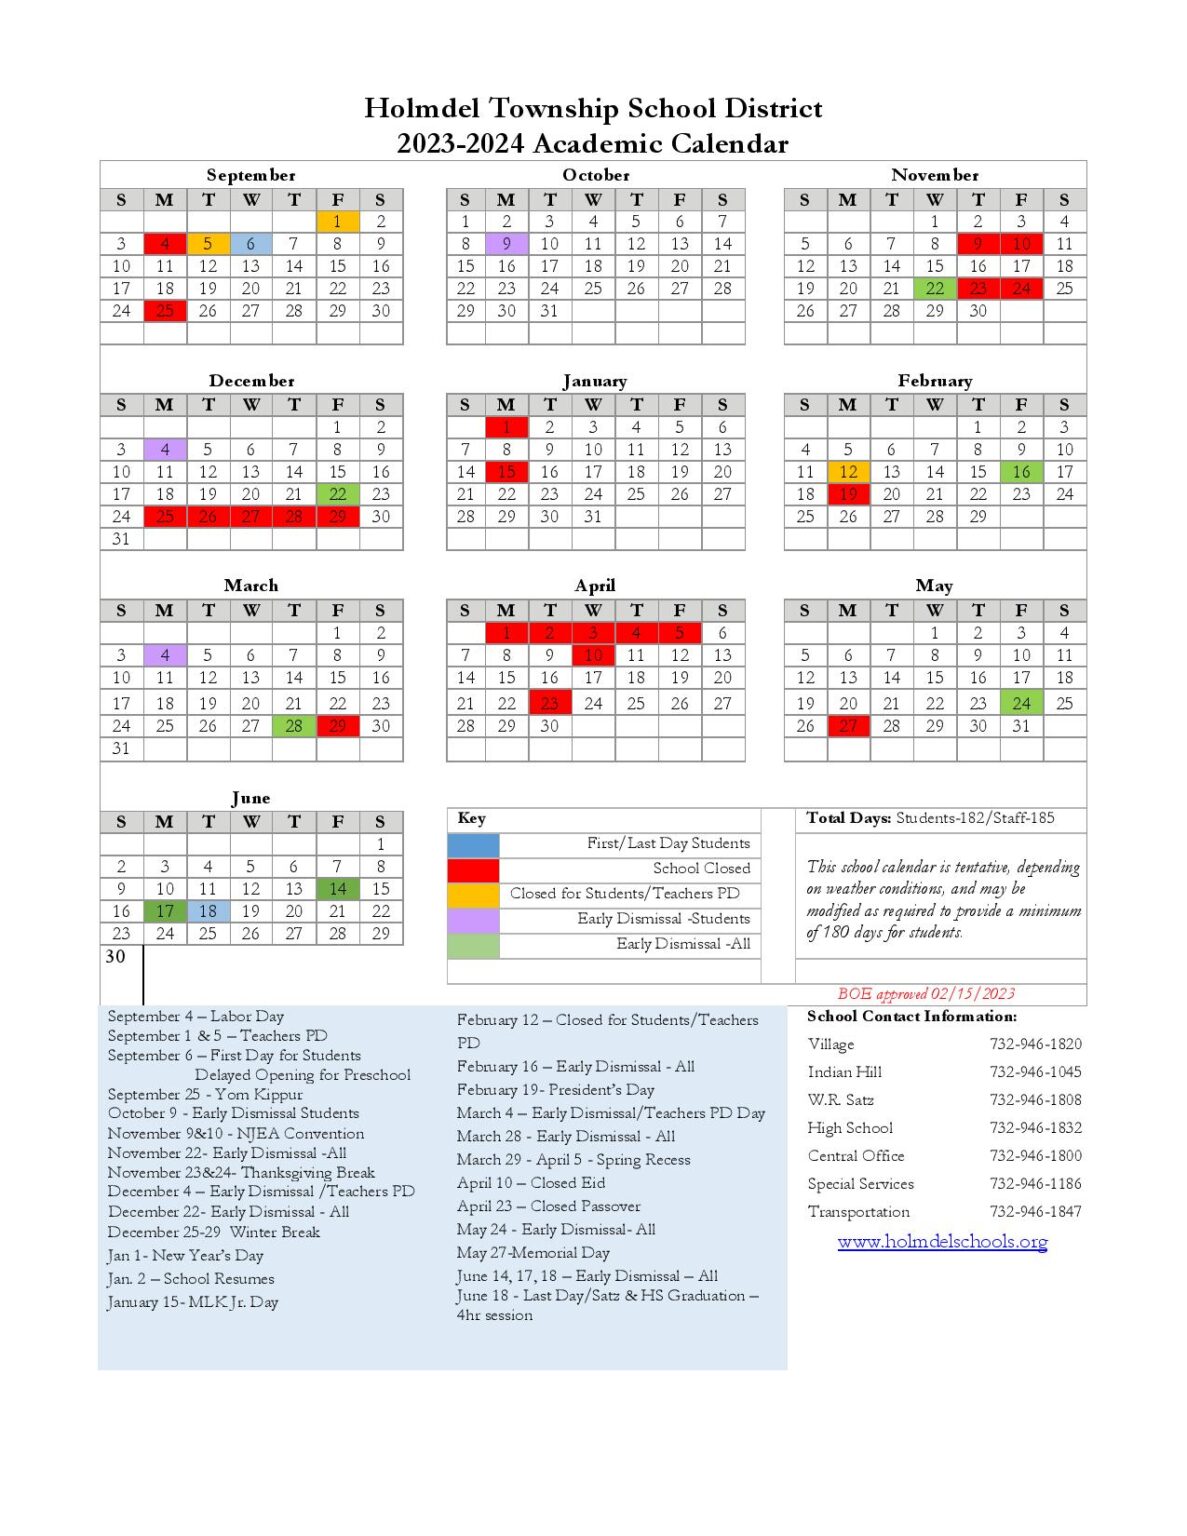 holmdel-township-schools-calendar-2023-2024-academic-year-school